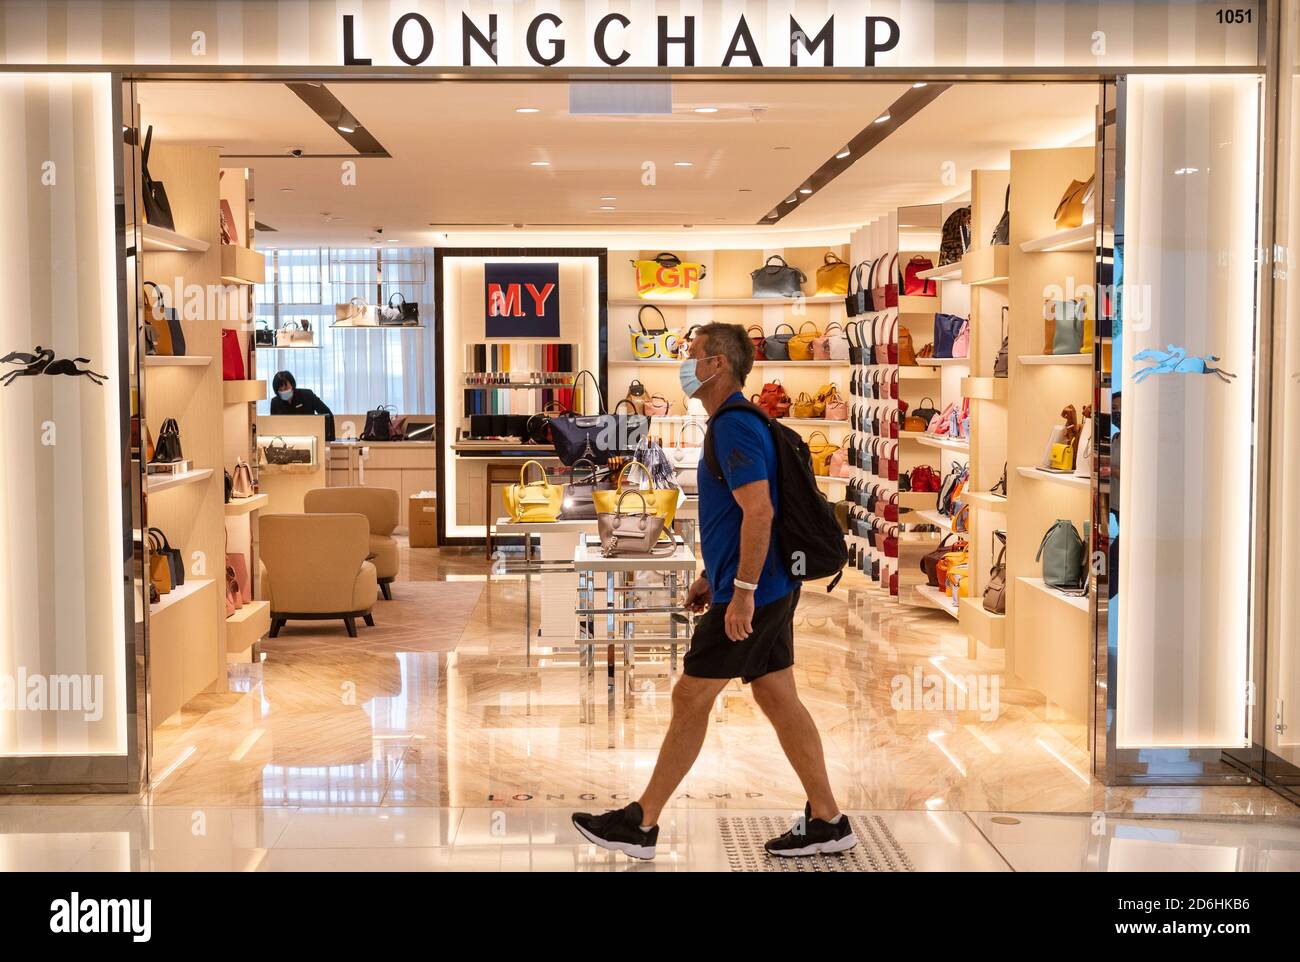 French luxury fashion brand Longchamp store seen in Hong Kong